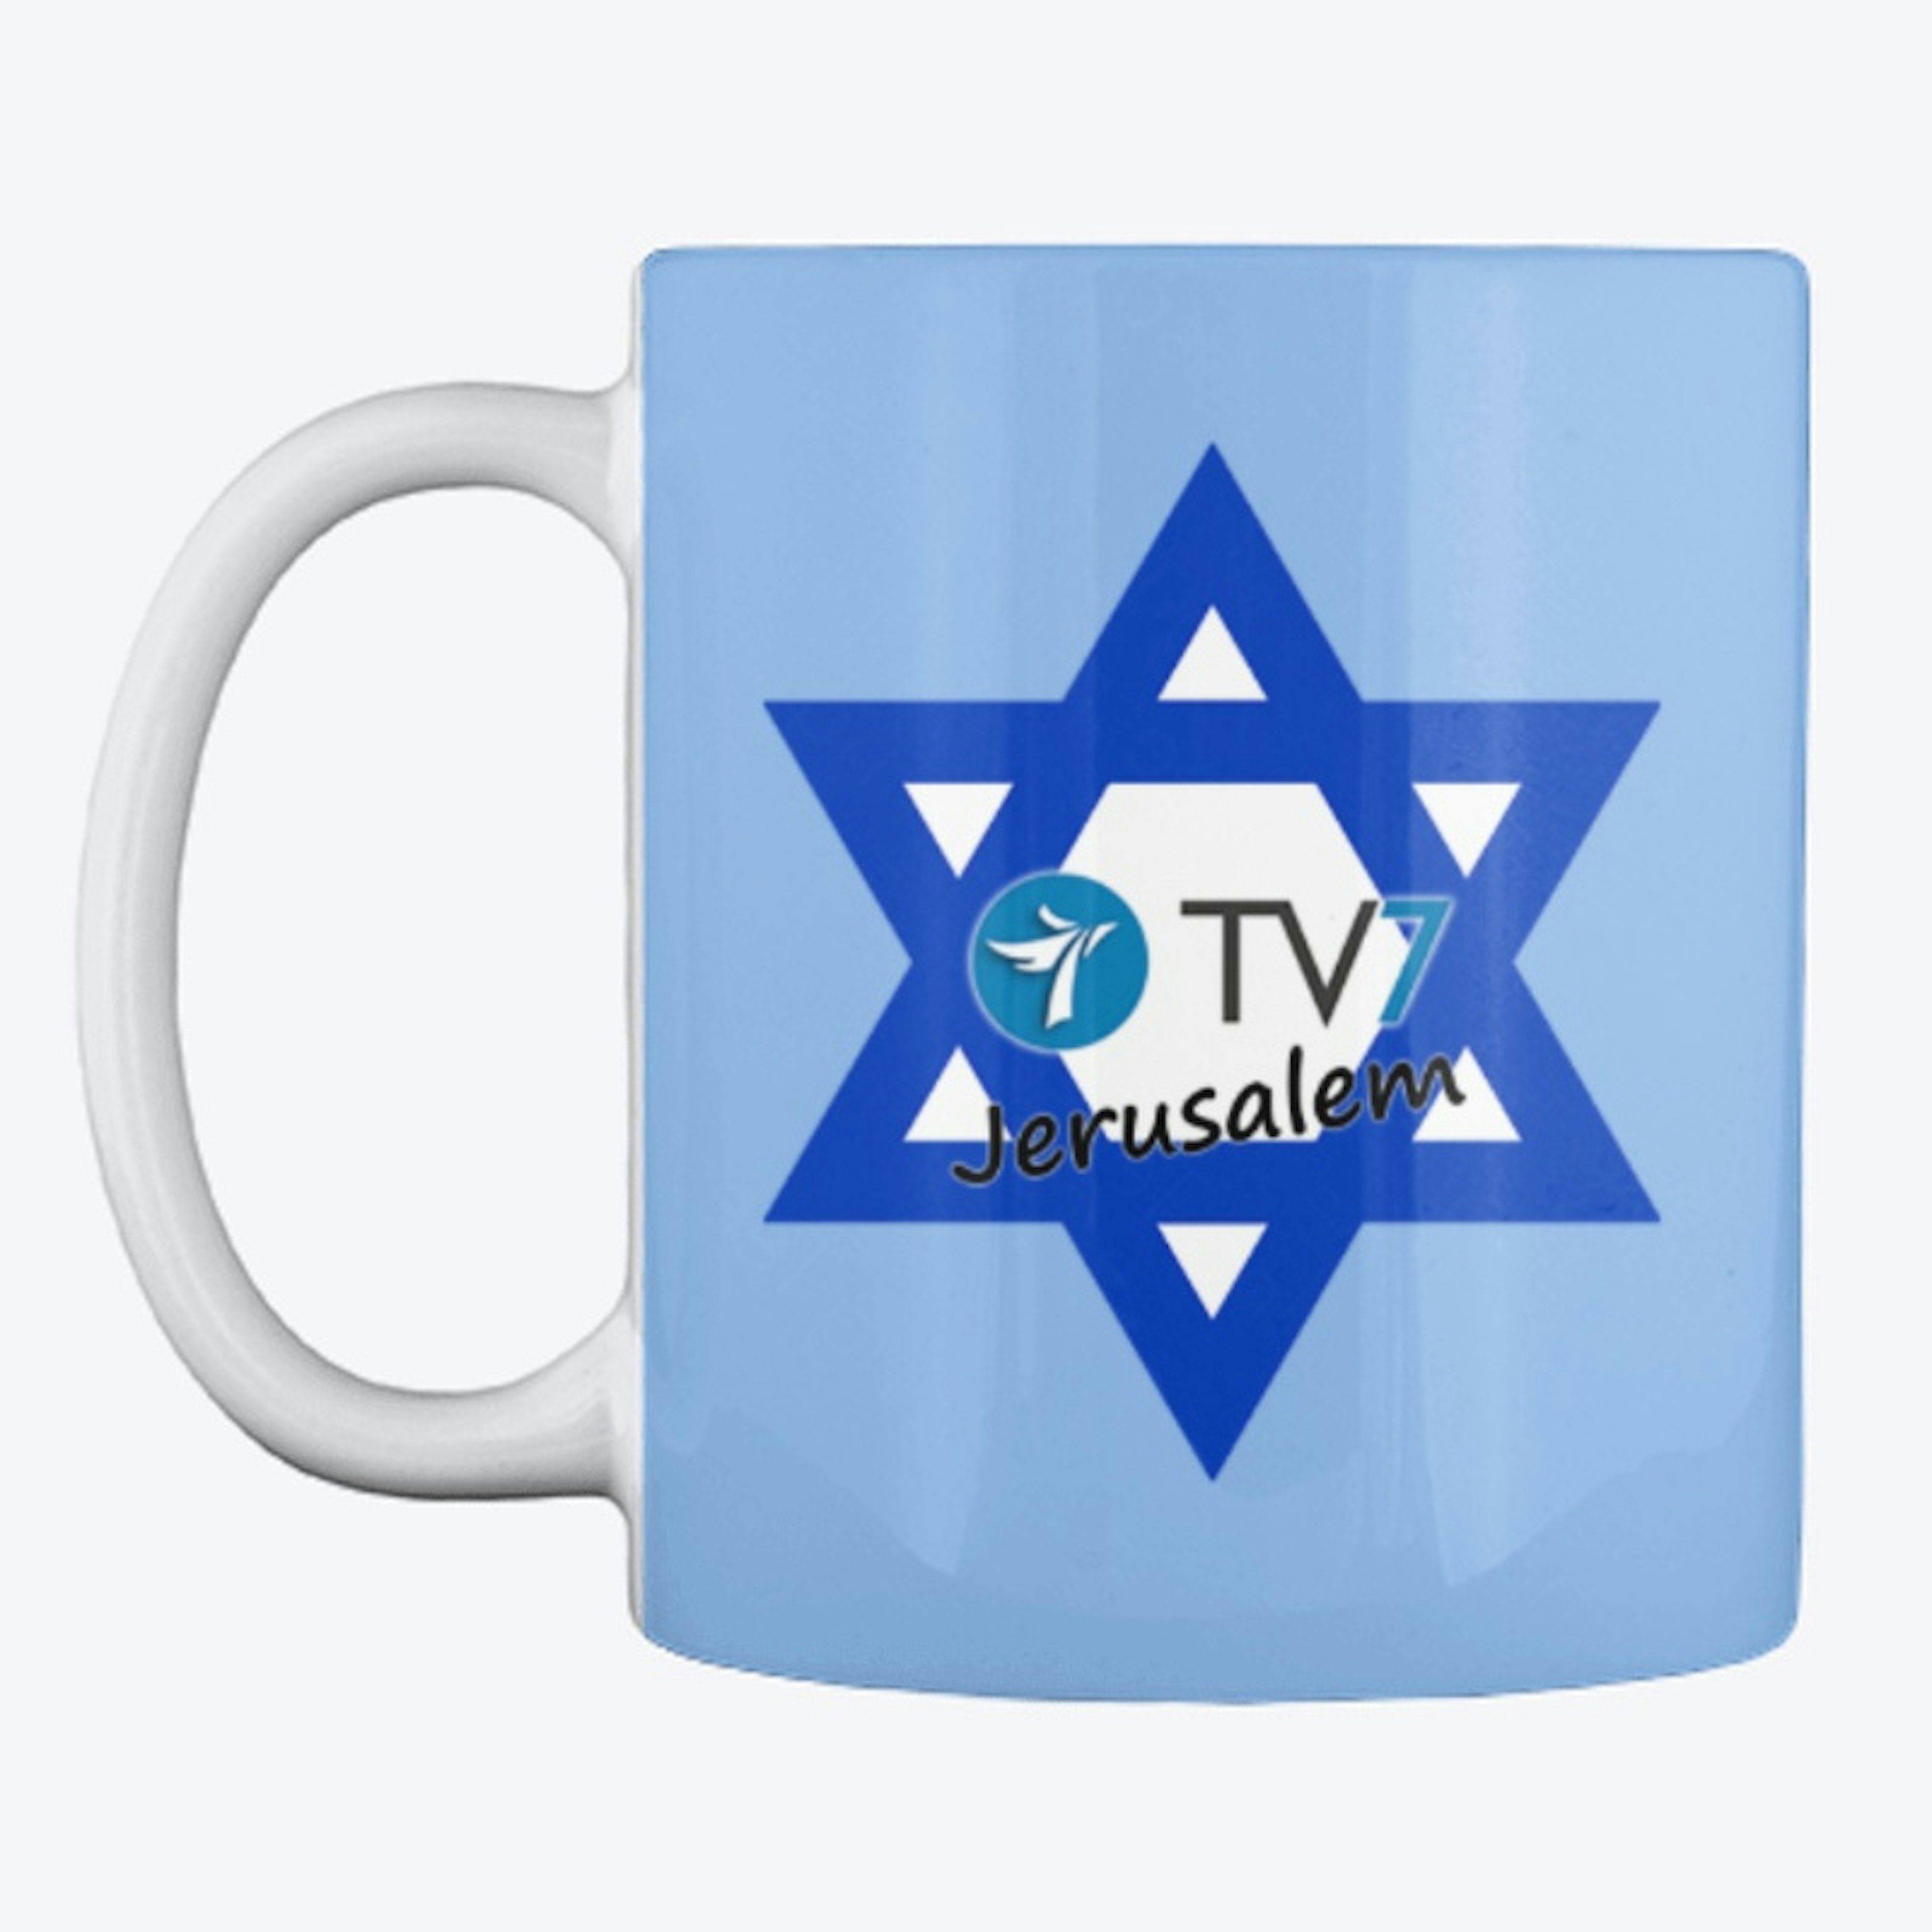 TV7 Israel News/Star of David Mug